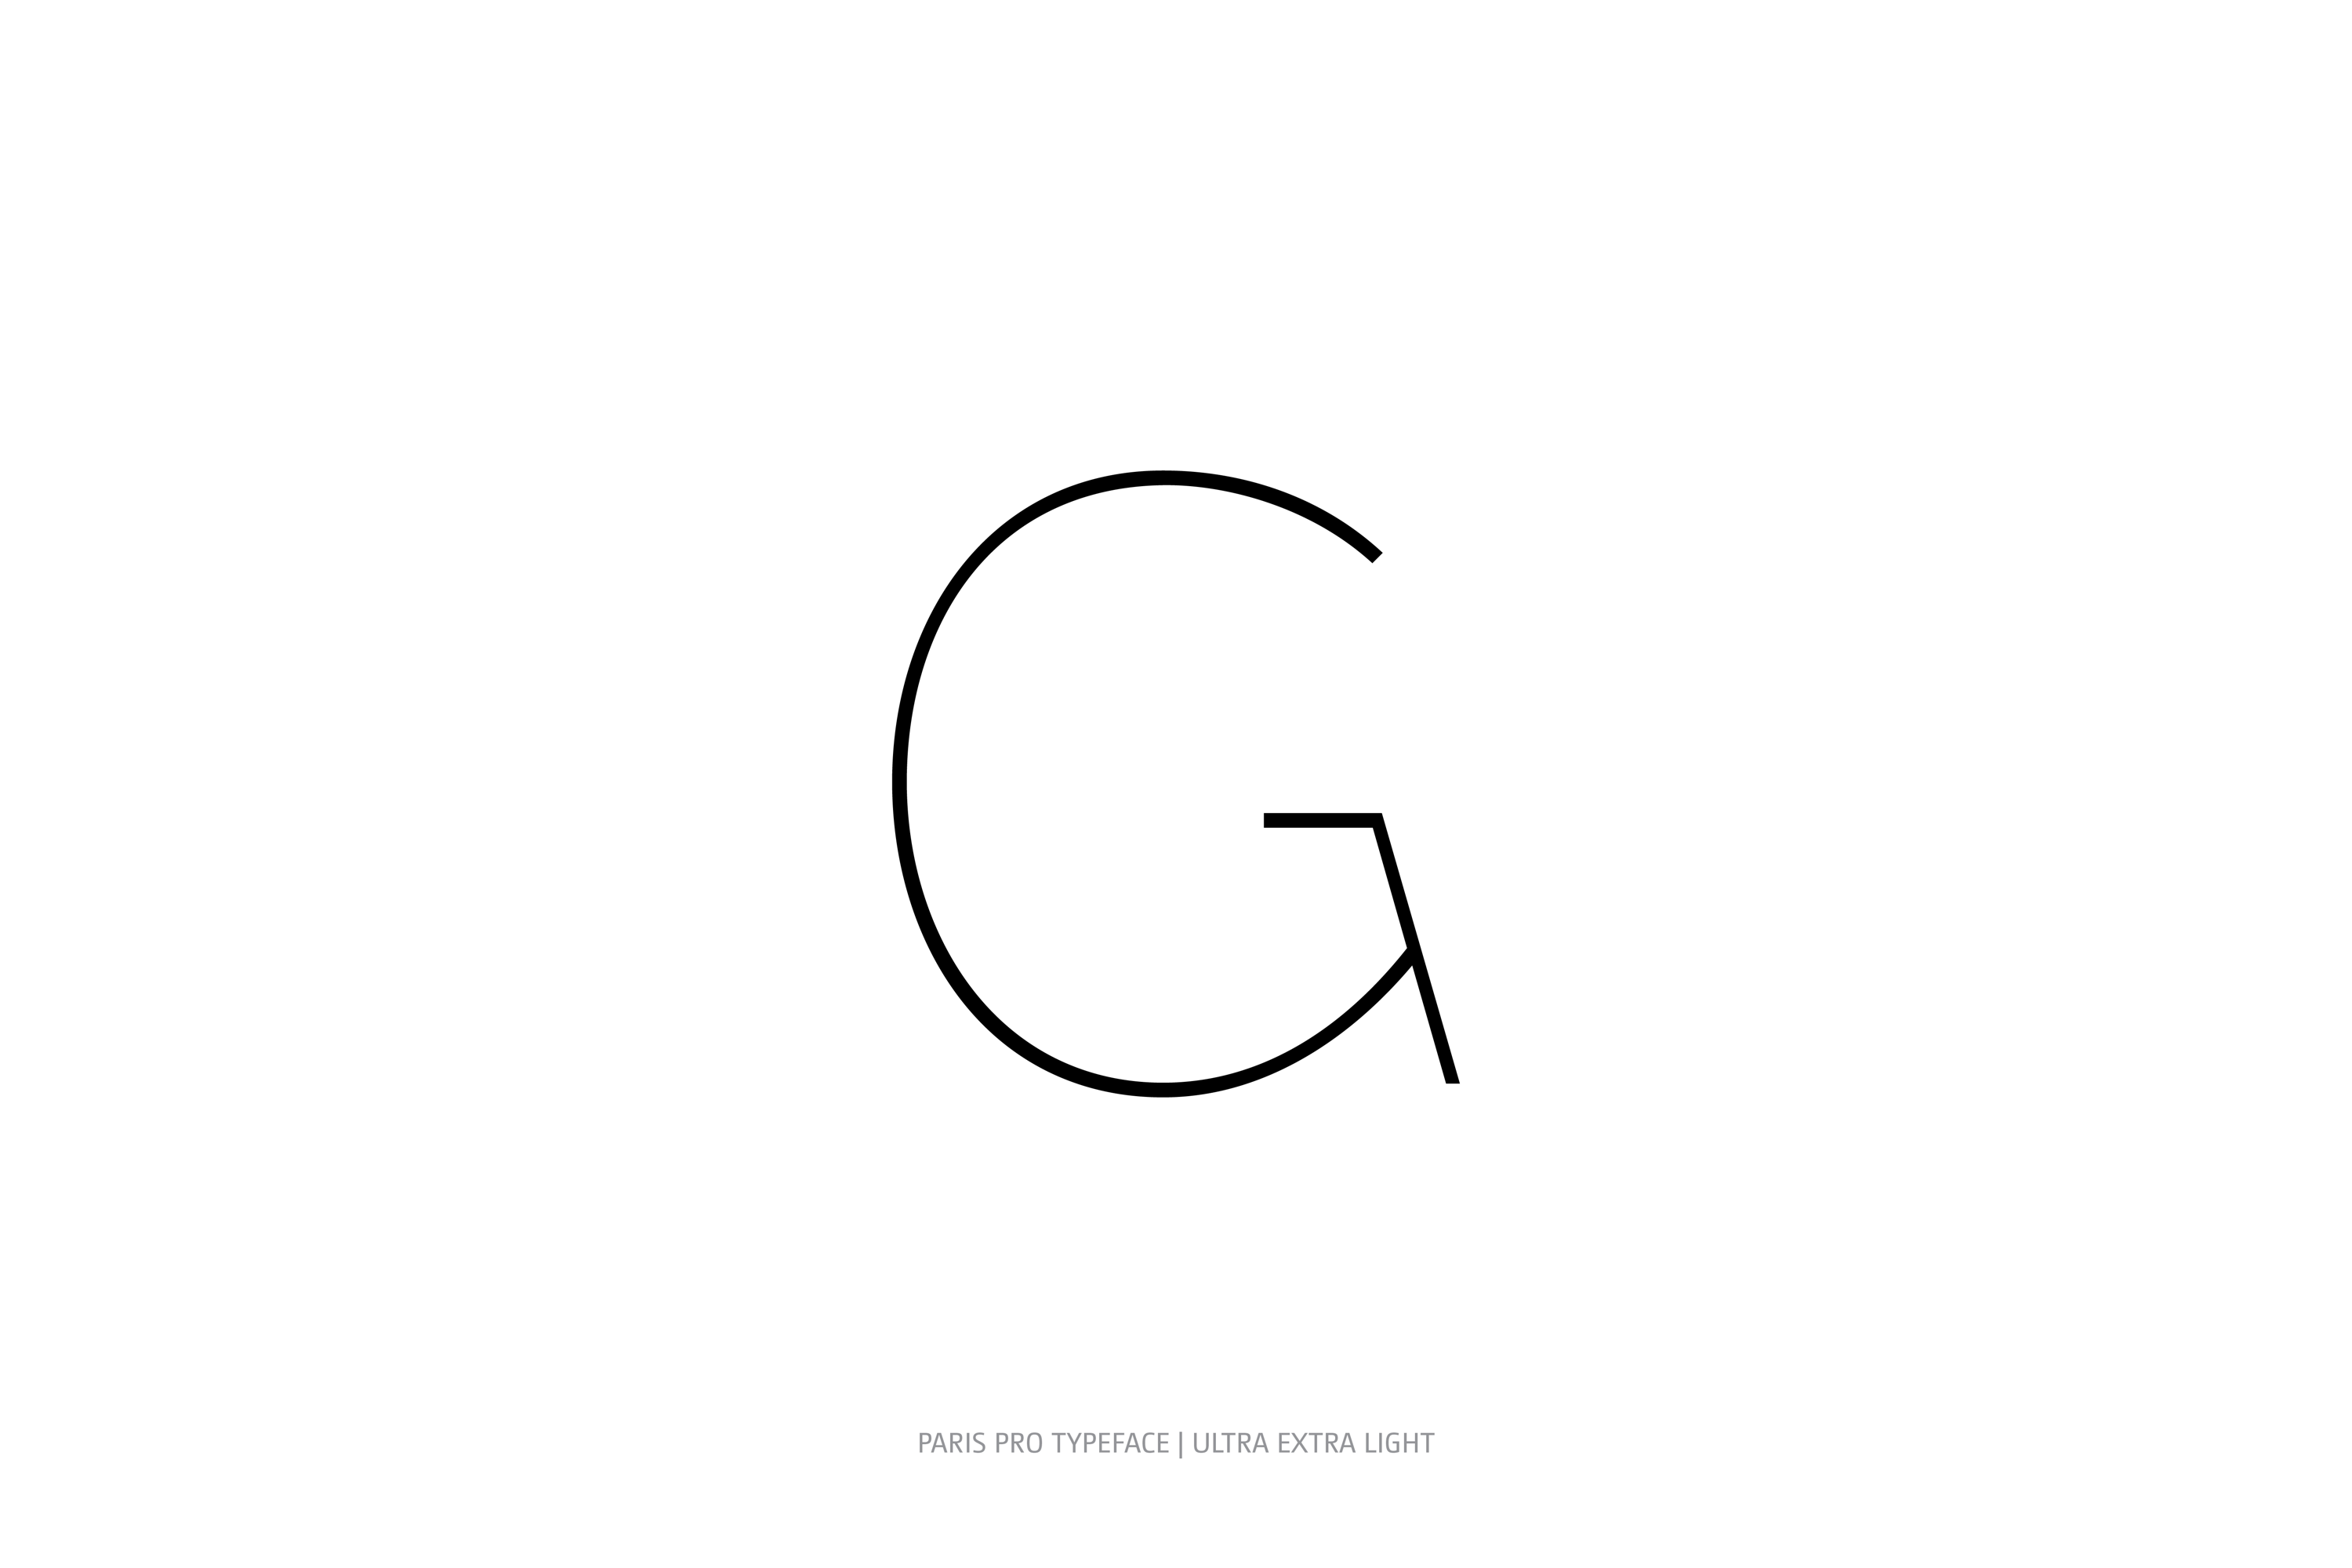 Paris Pro Typeface Ultra Extra Light Style G